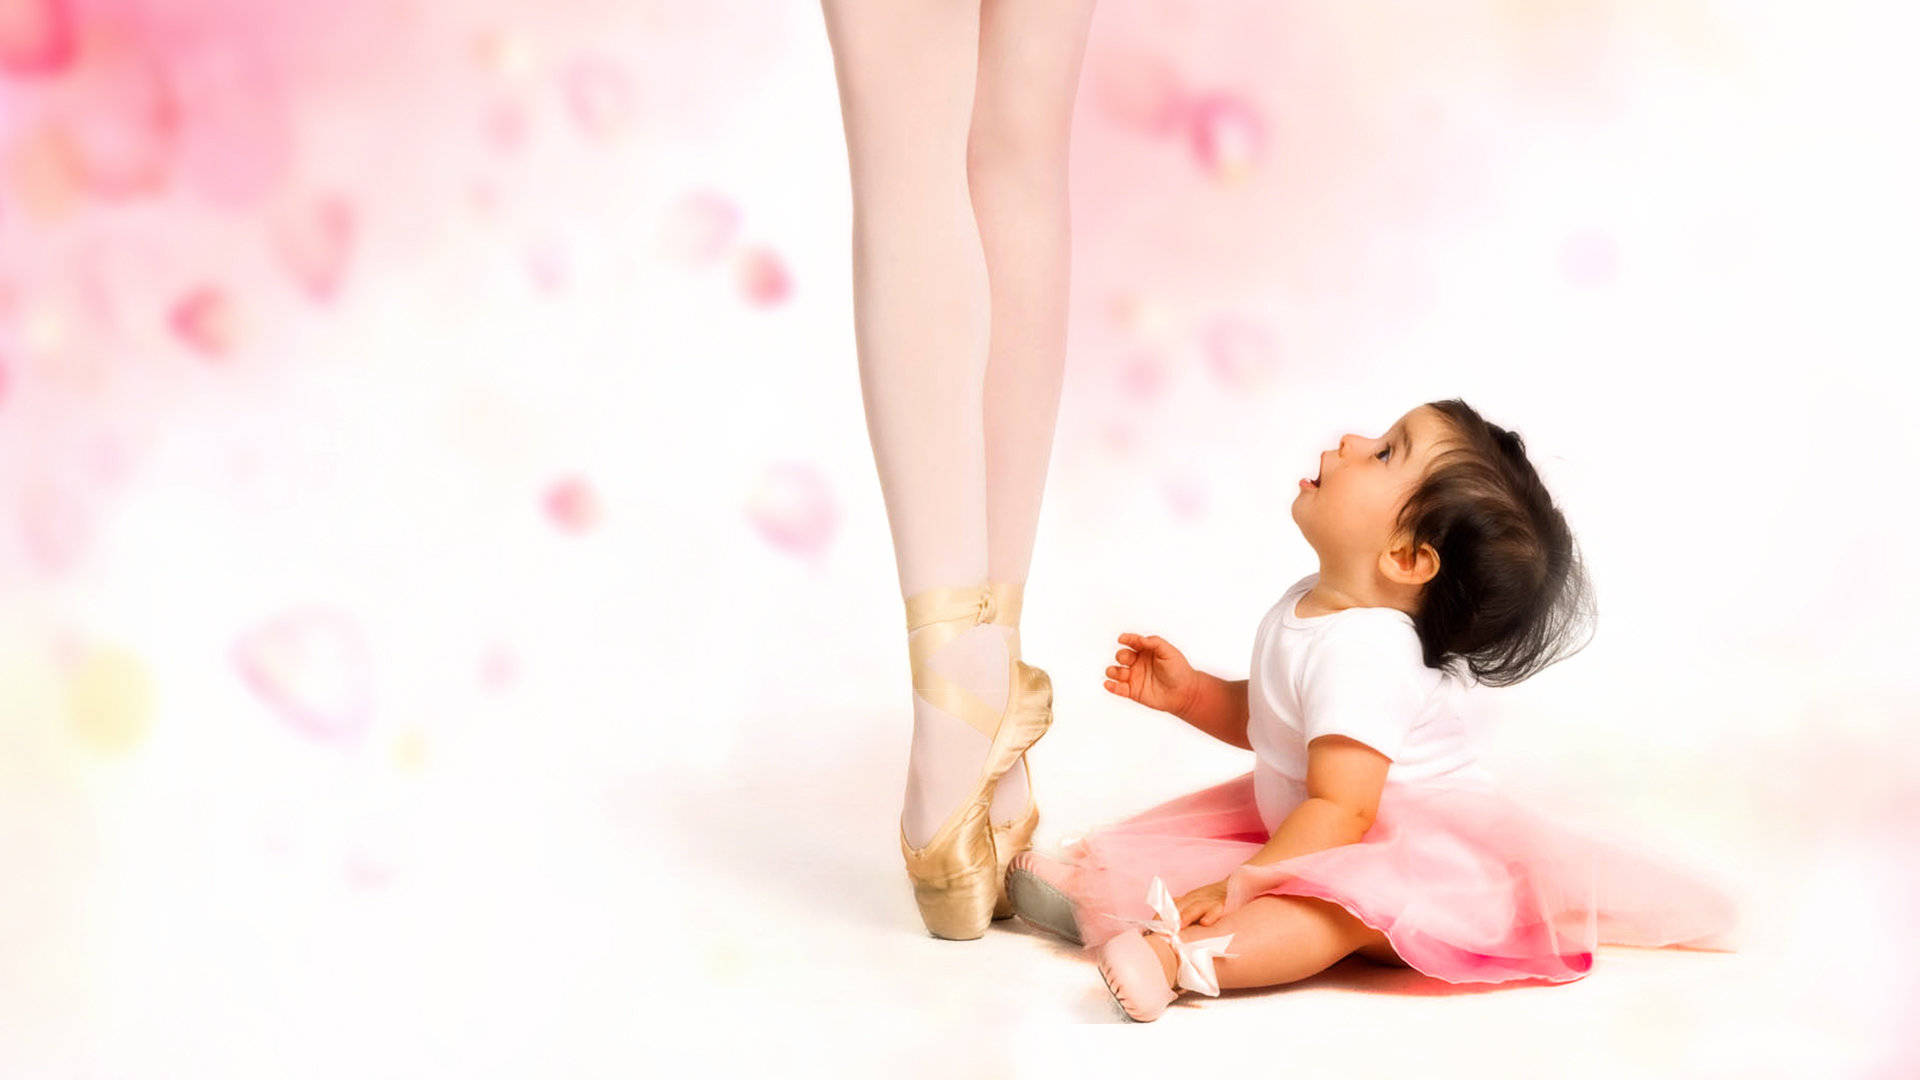 Ballet Dancer And Baby Background